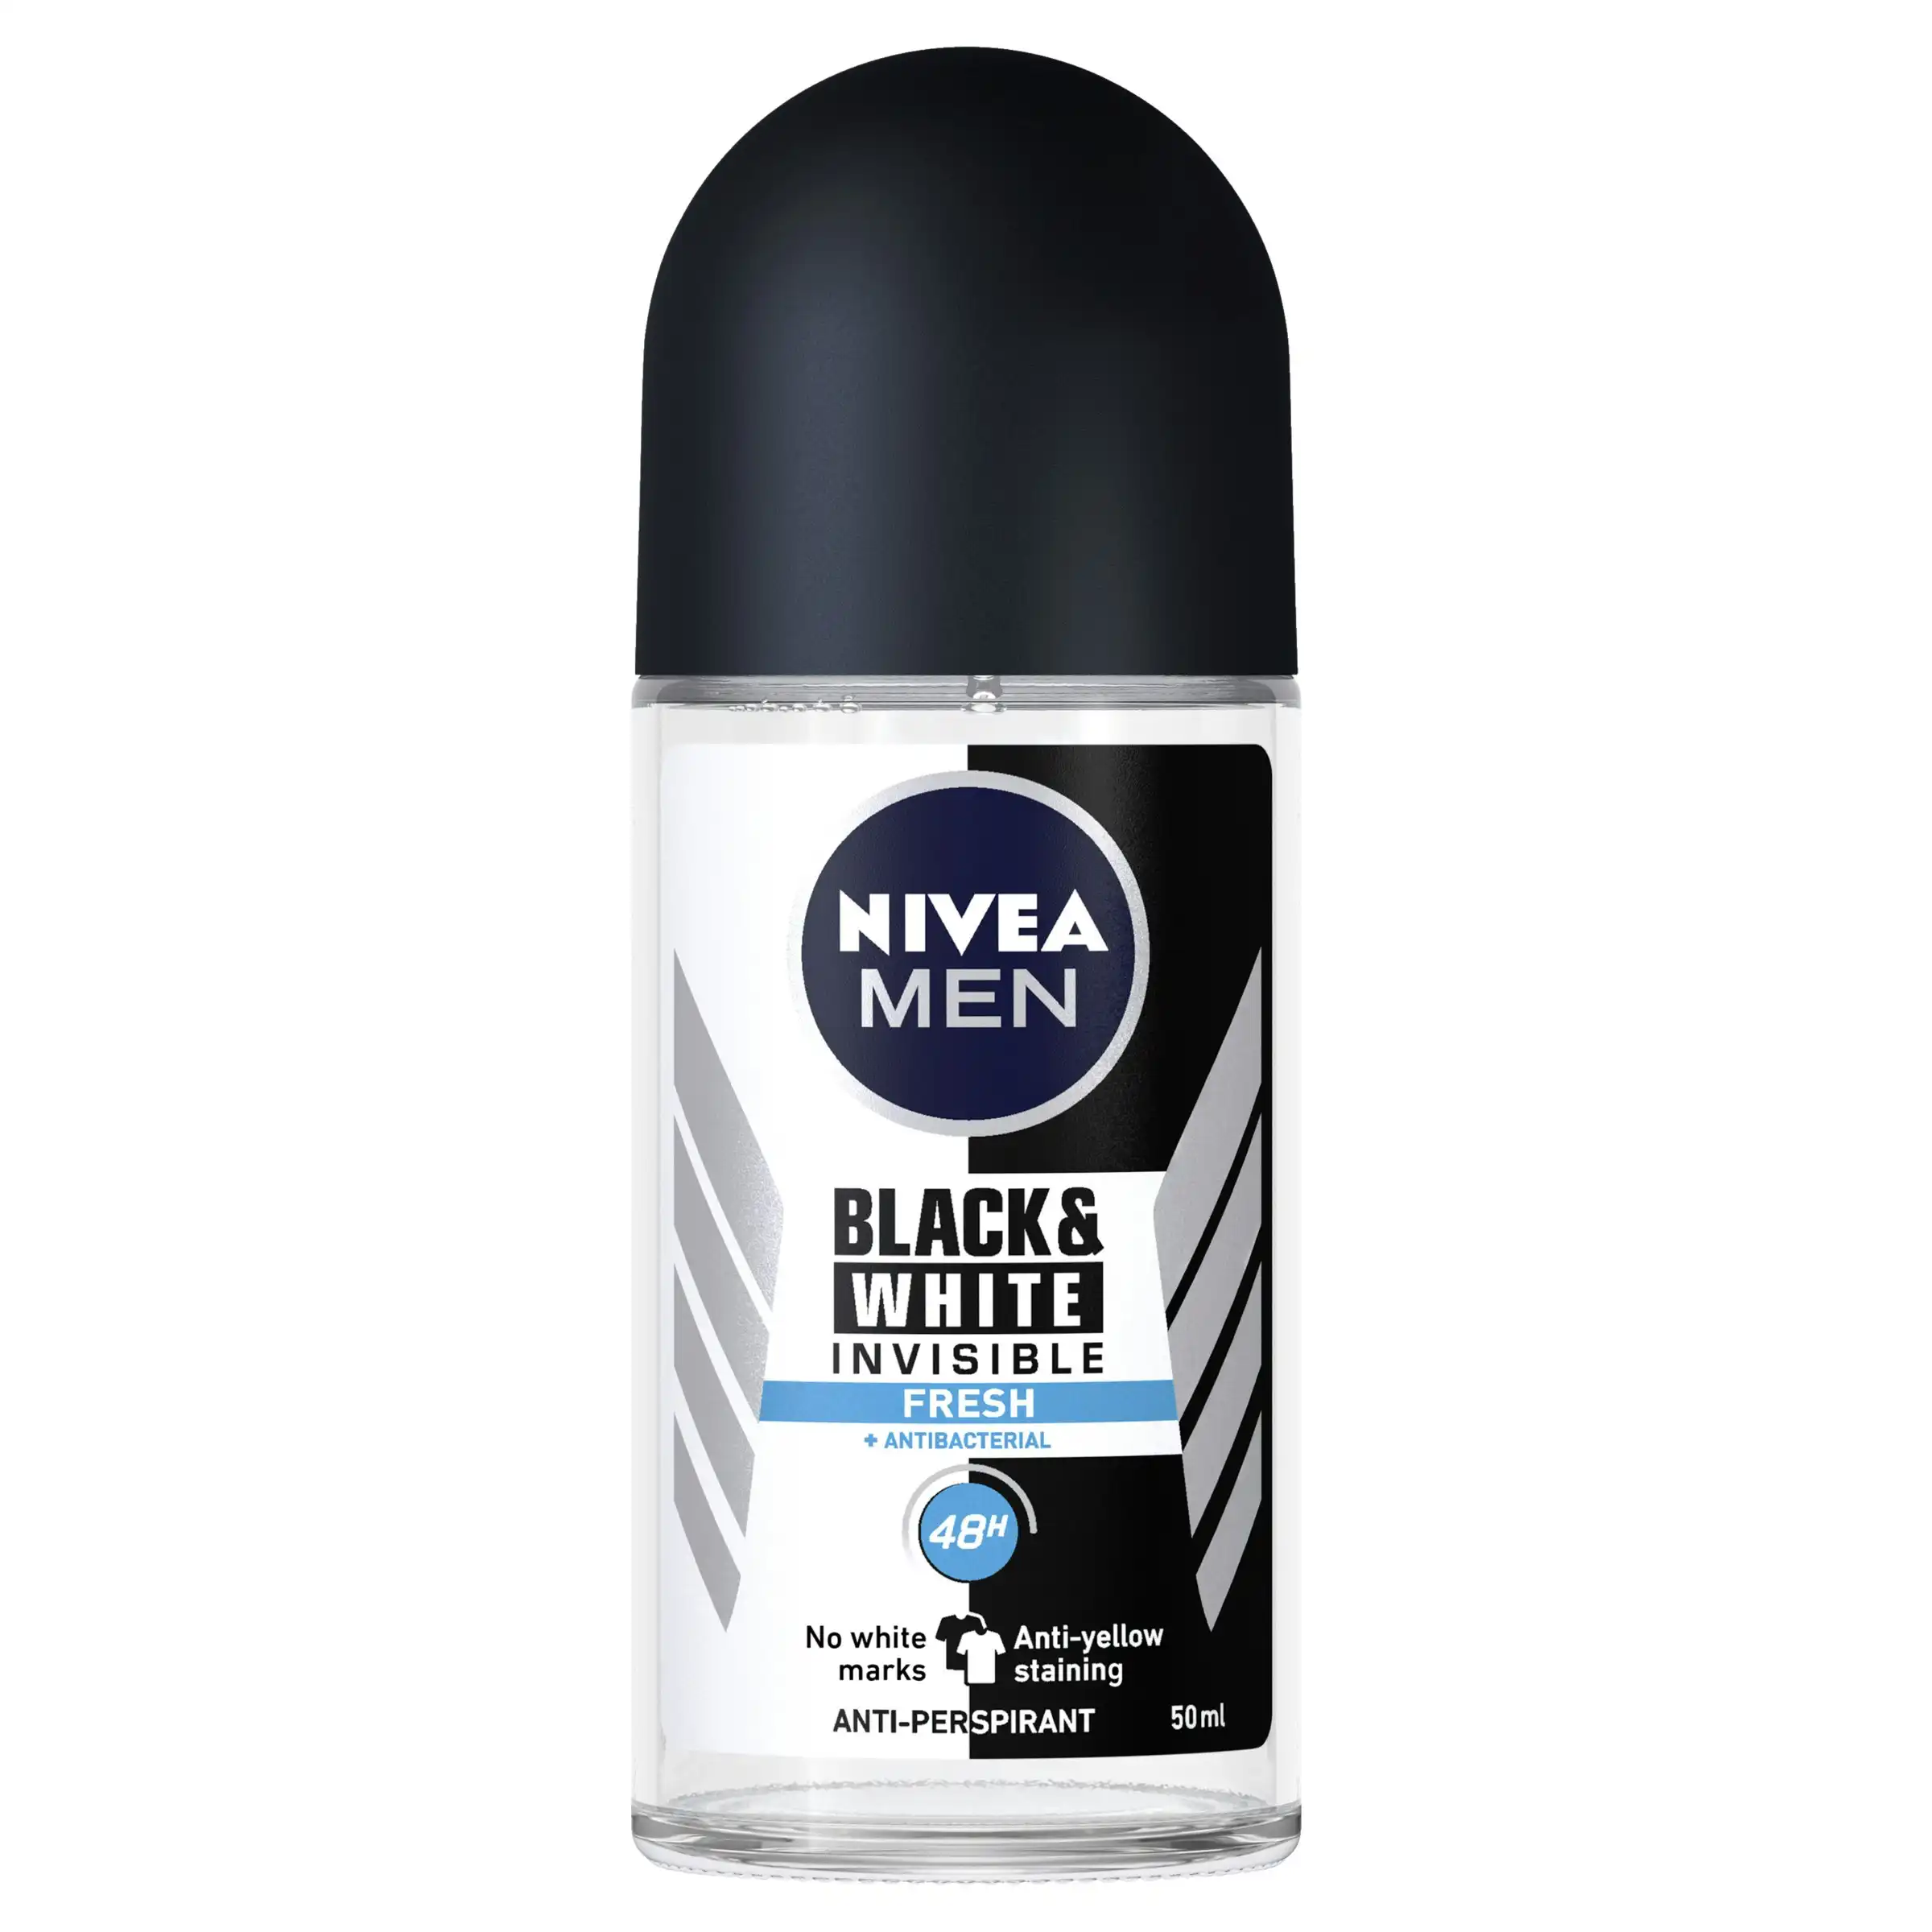 Nivea Men Invisible Black and White Fresh Roll-on Deodorant 50ml